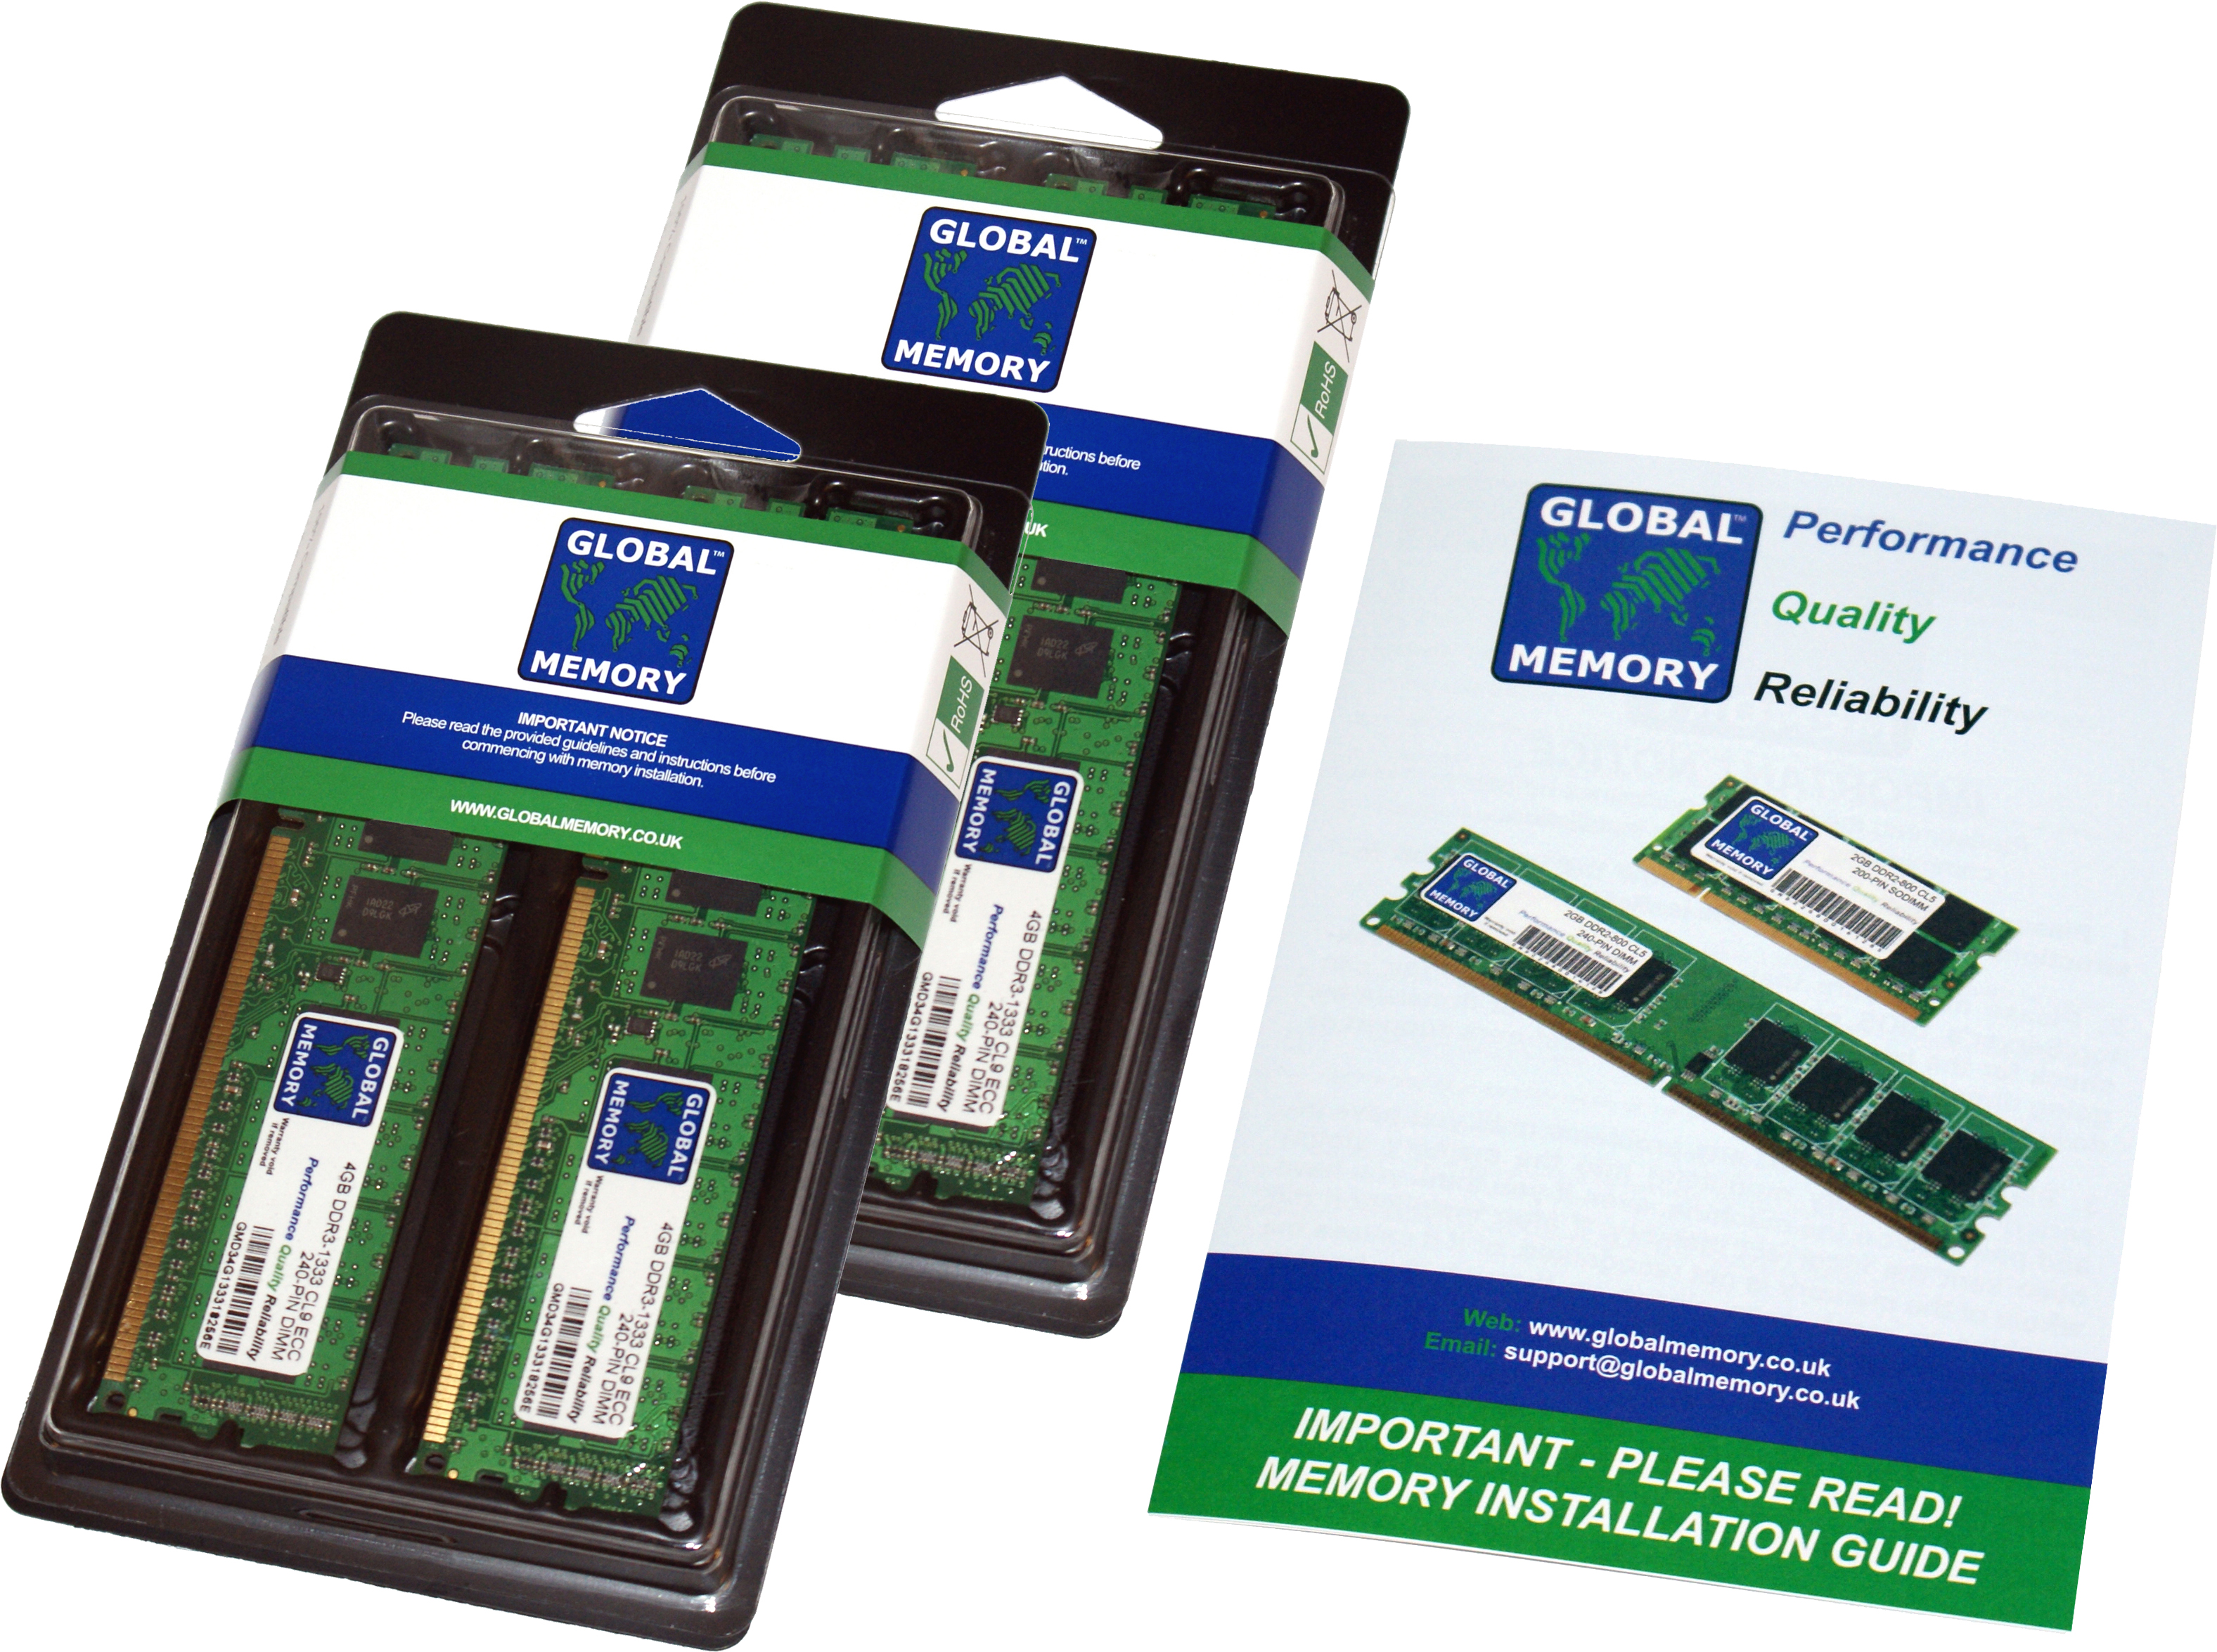 64GB (4 x 16GB) DDR4 2400MHz PC4-19200 288-PIN DIMM MEMORY RAM KIT FOR PC DESKTOPS/MOTHERBOARDS